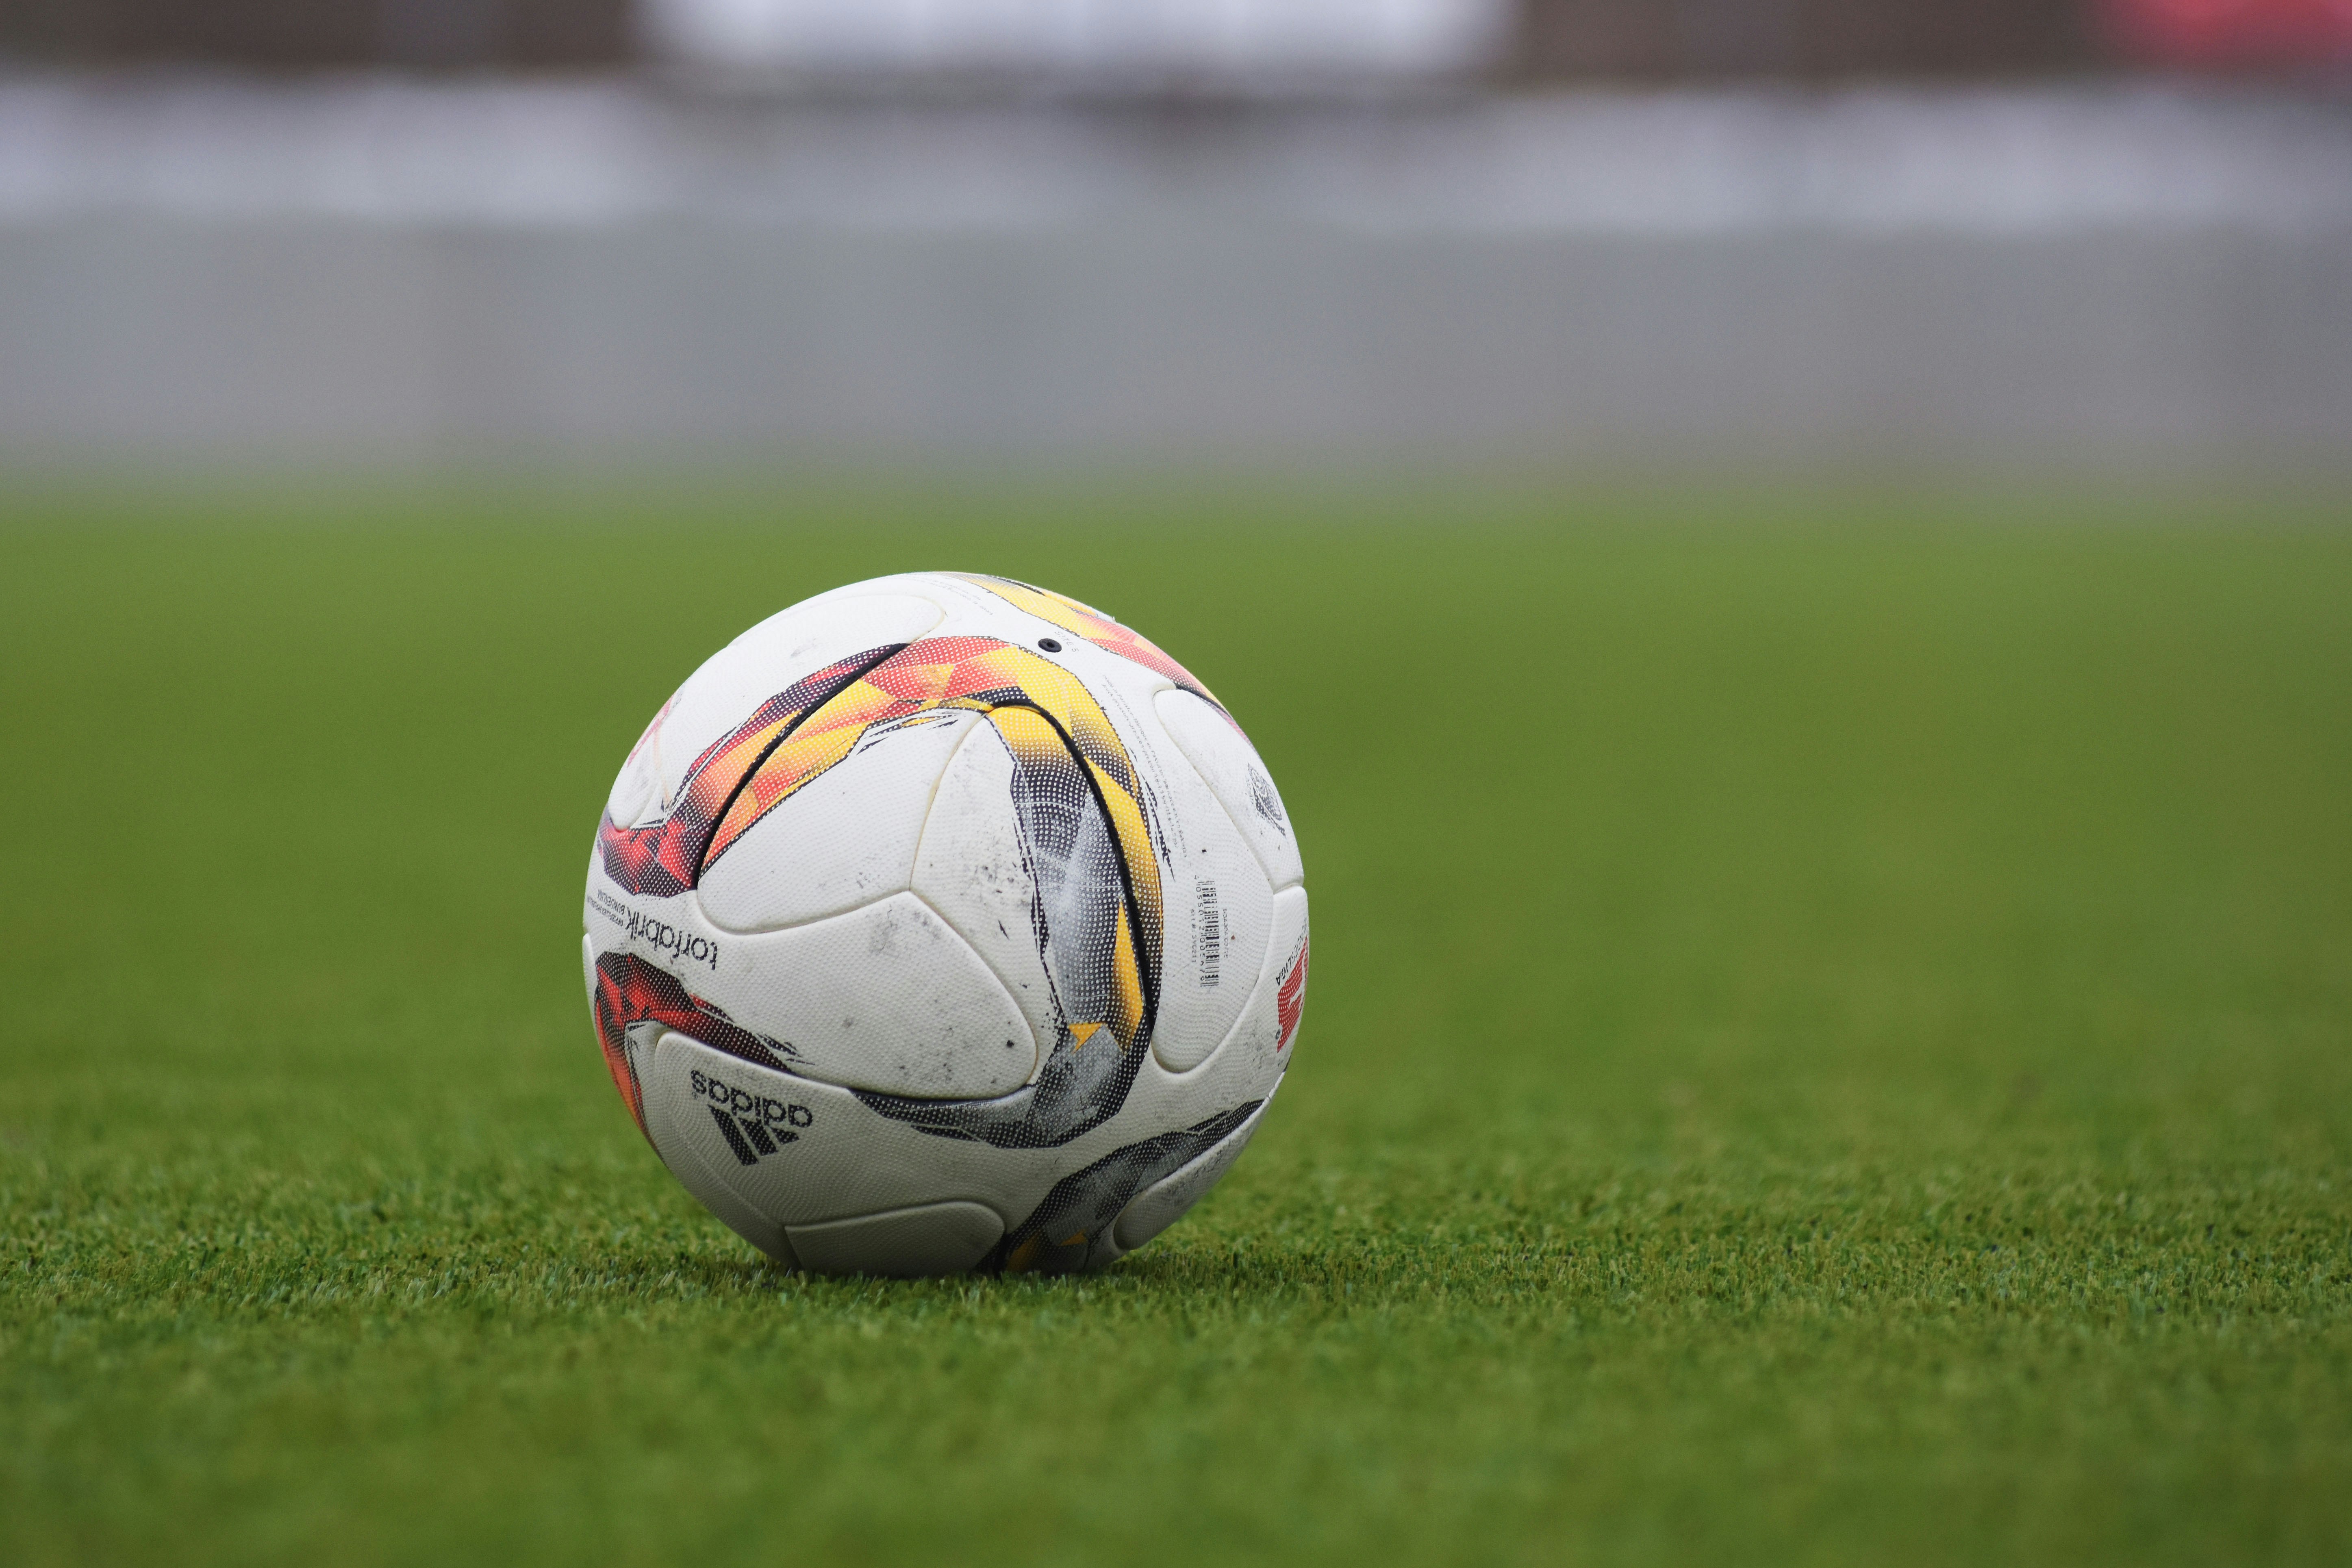 Adidas soccer ball on a grass pitch